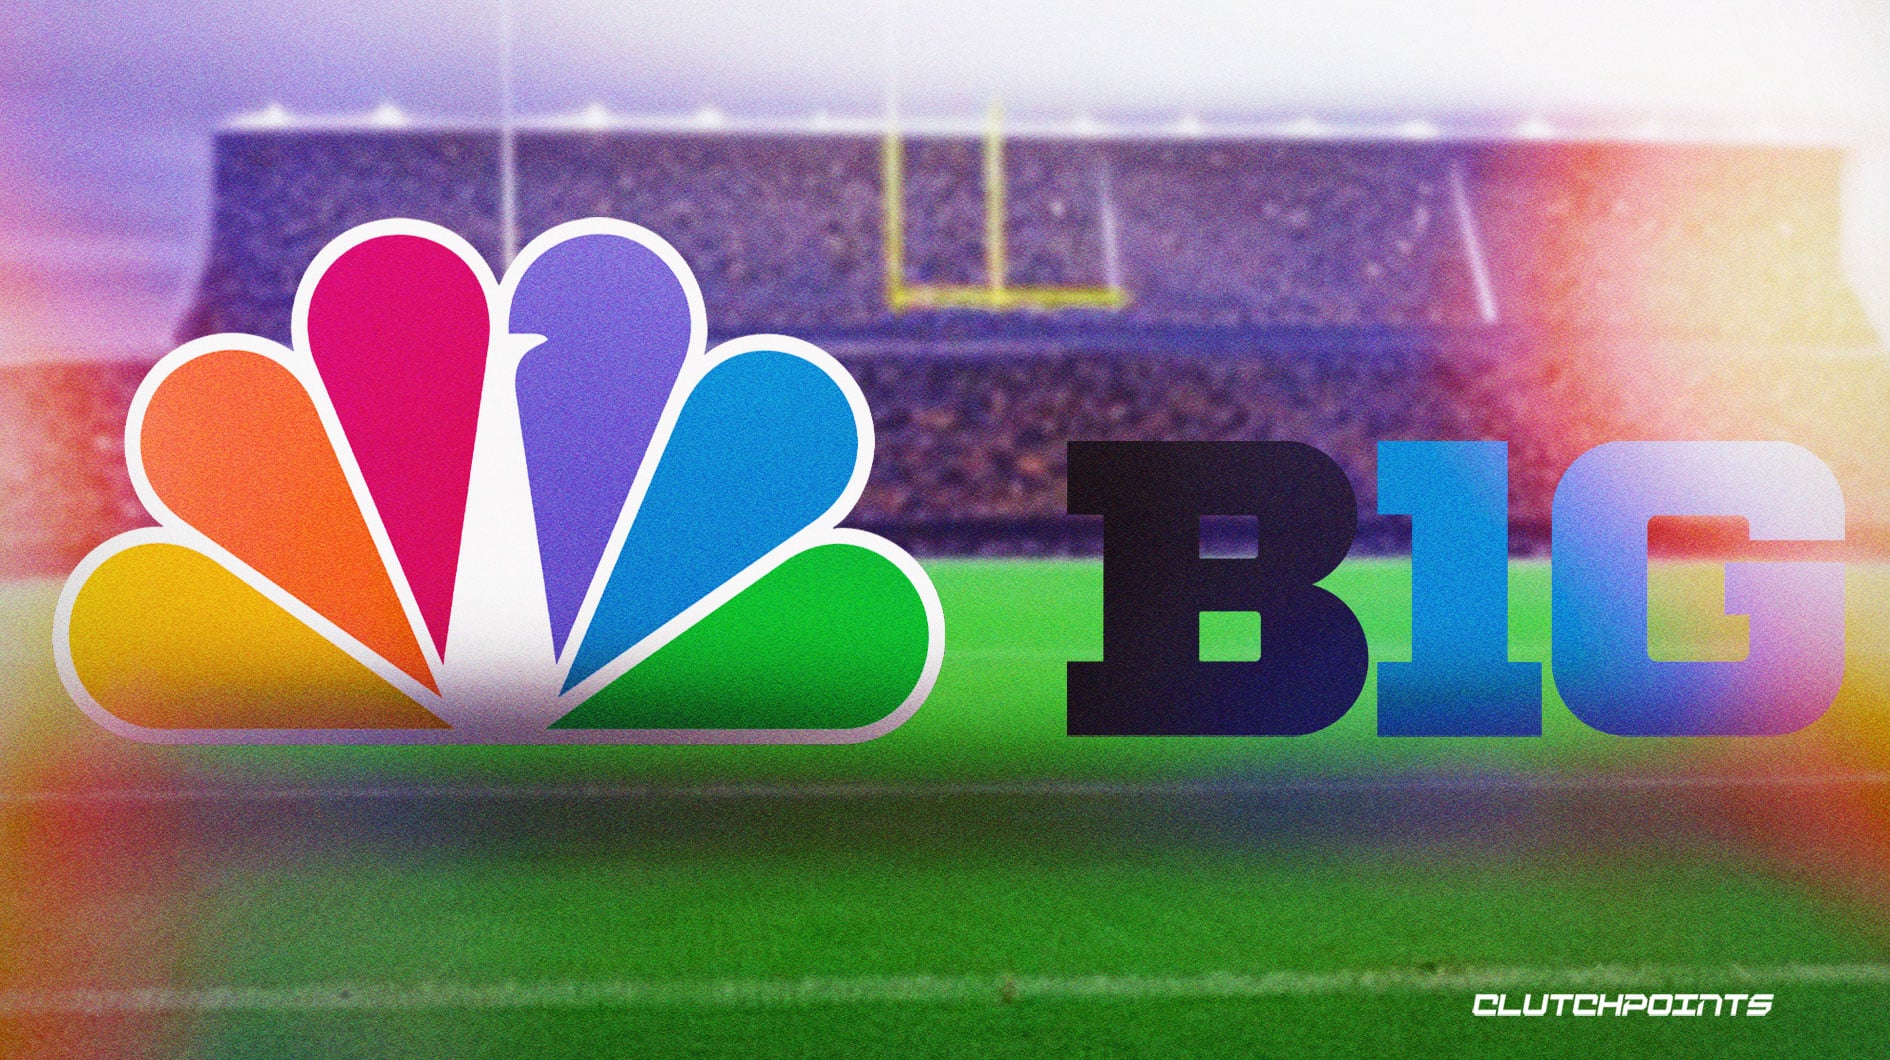 Big Ten NBC Sports makes big announcement for college season